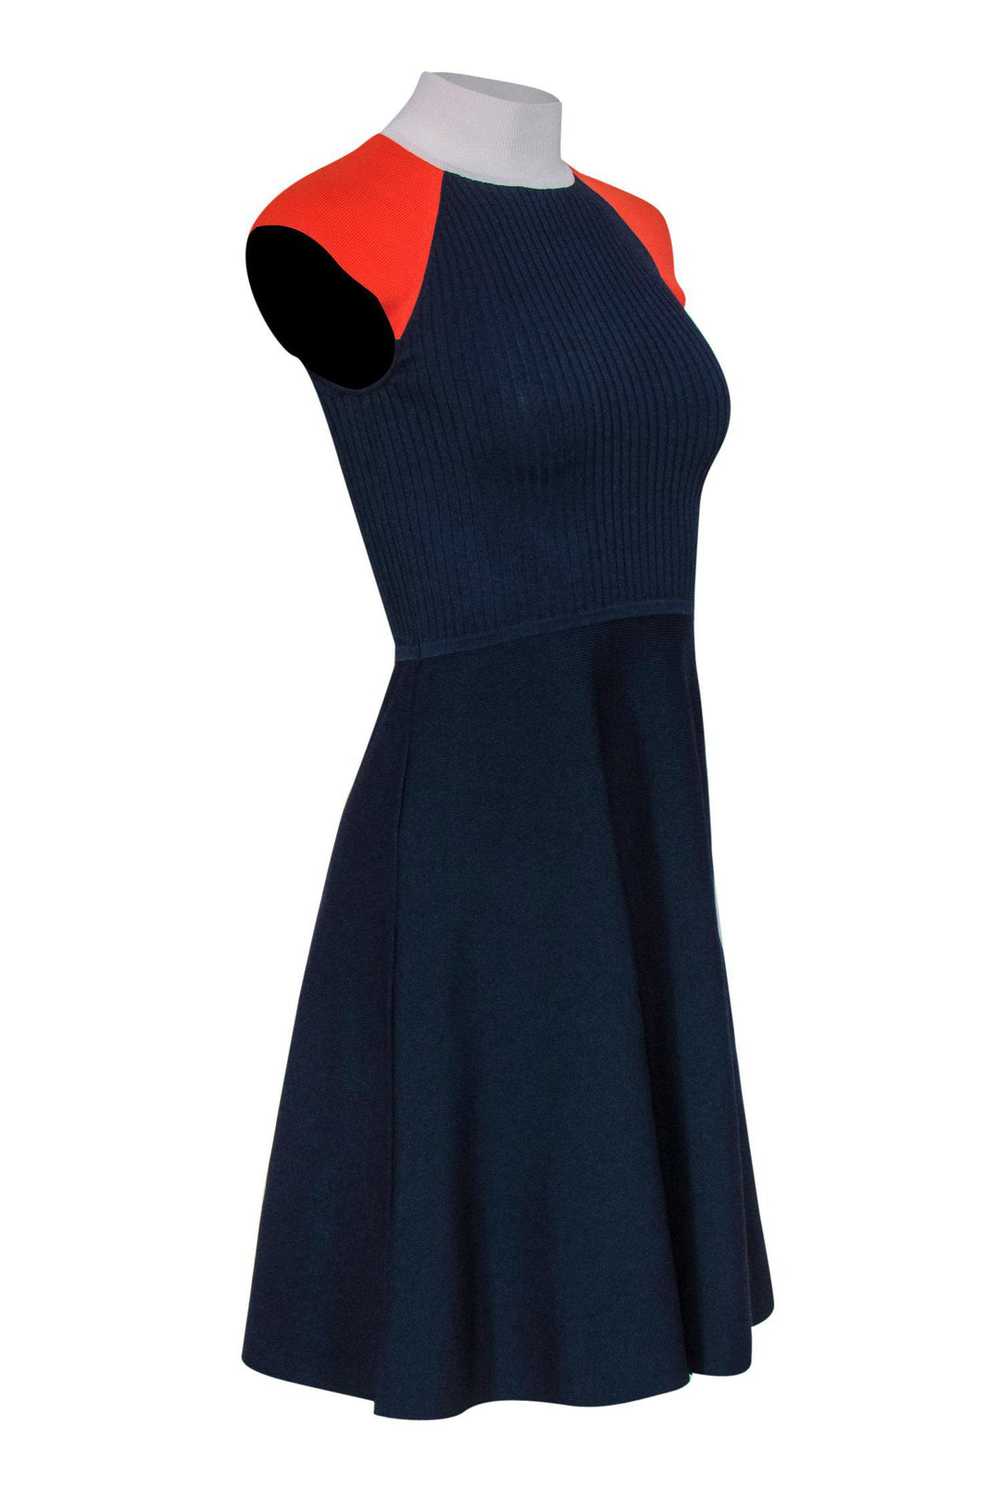 Karen Millen - Navy & Orange Ribbed Knit Short Sl… - image 2